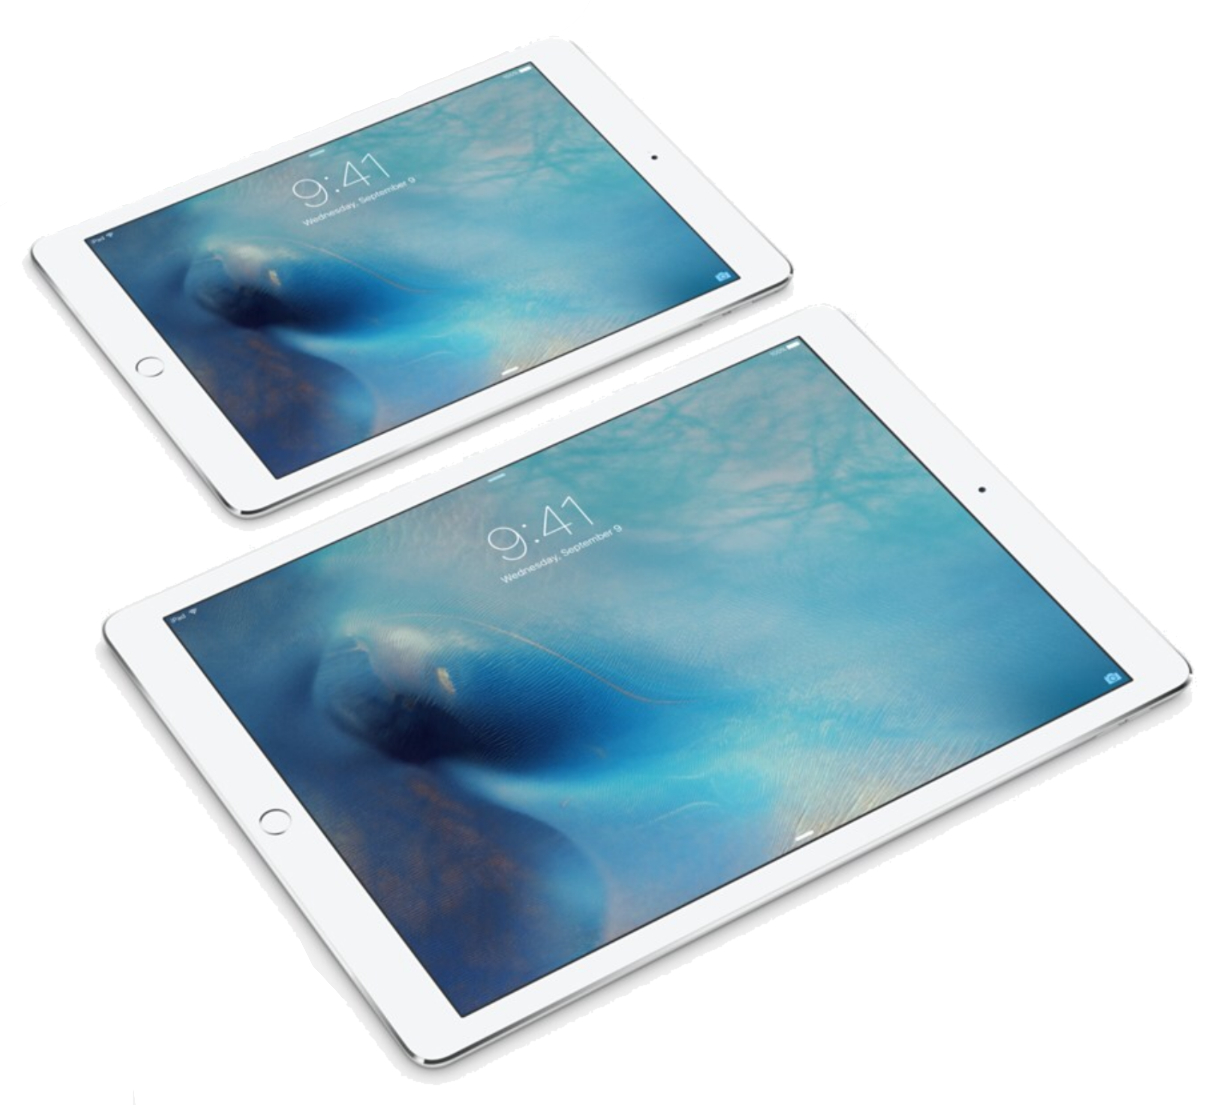 Apple iPad Pro models